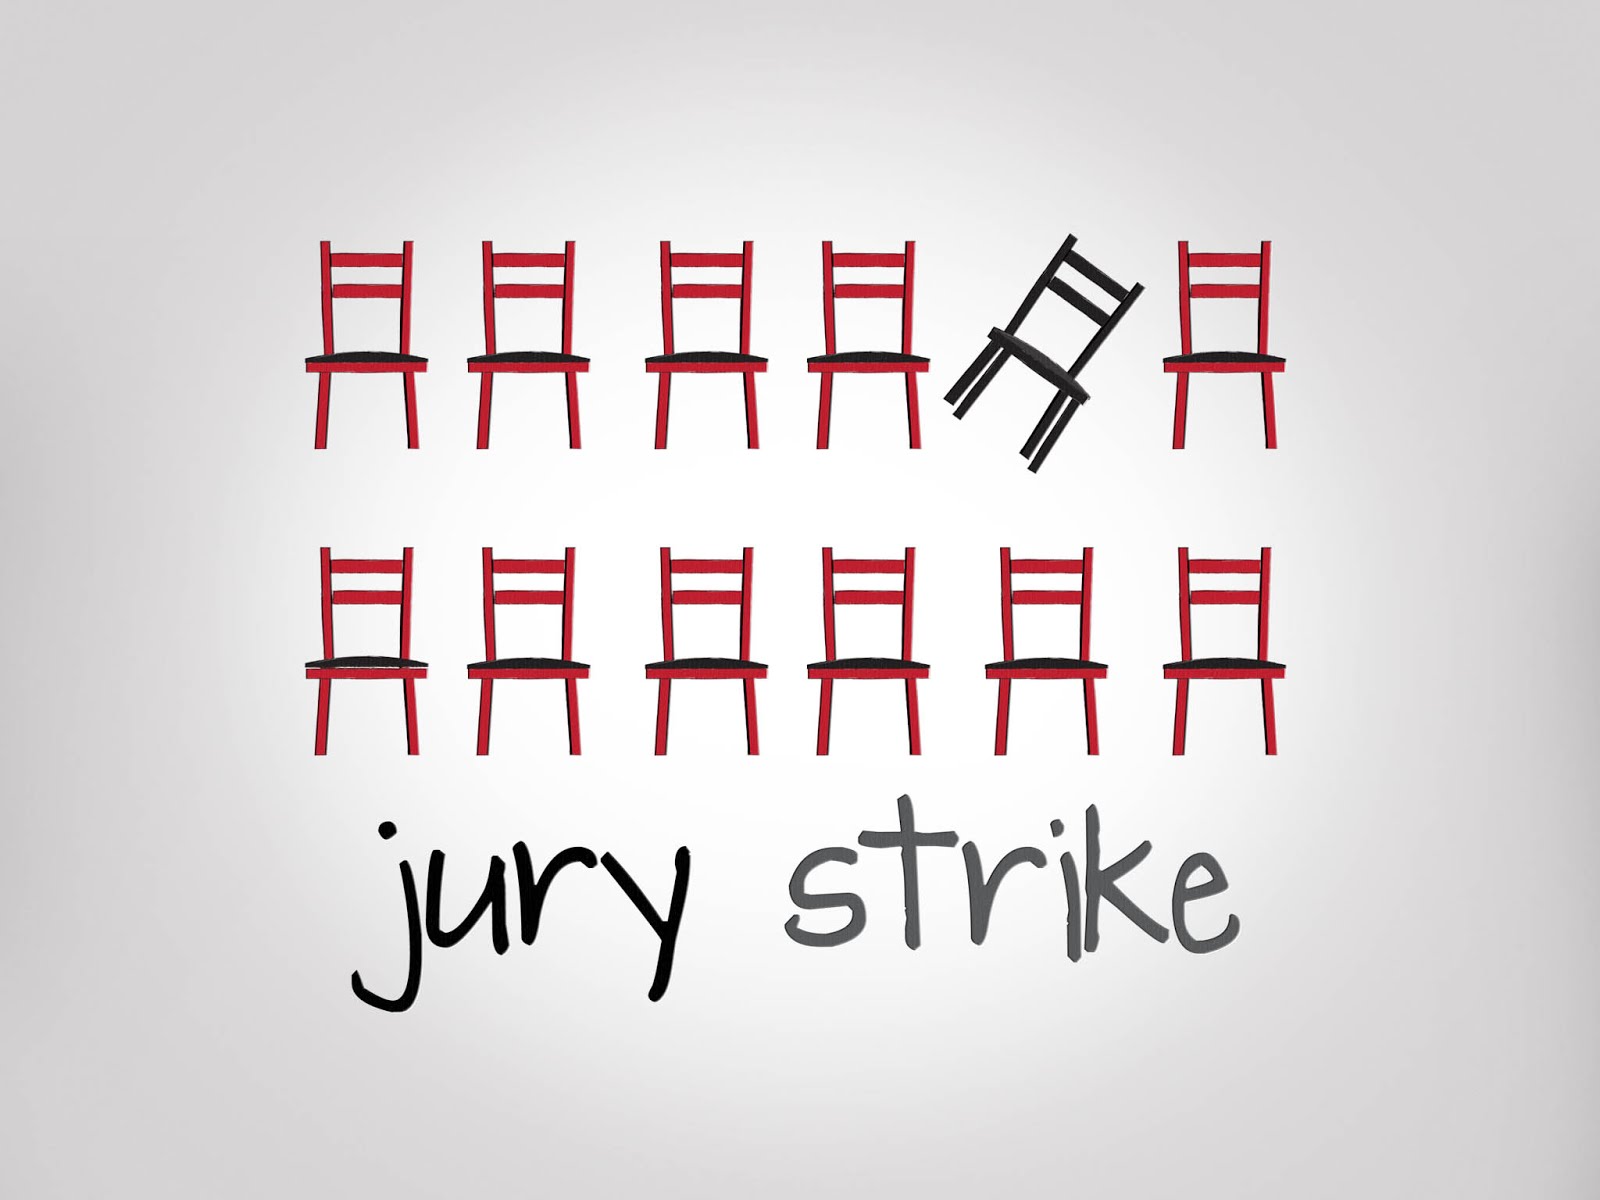 Jury Strike